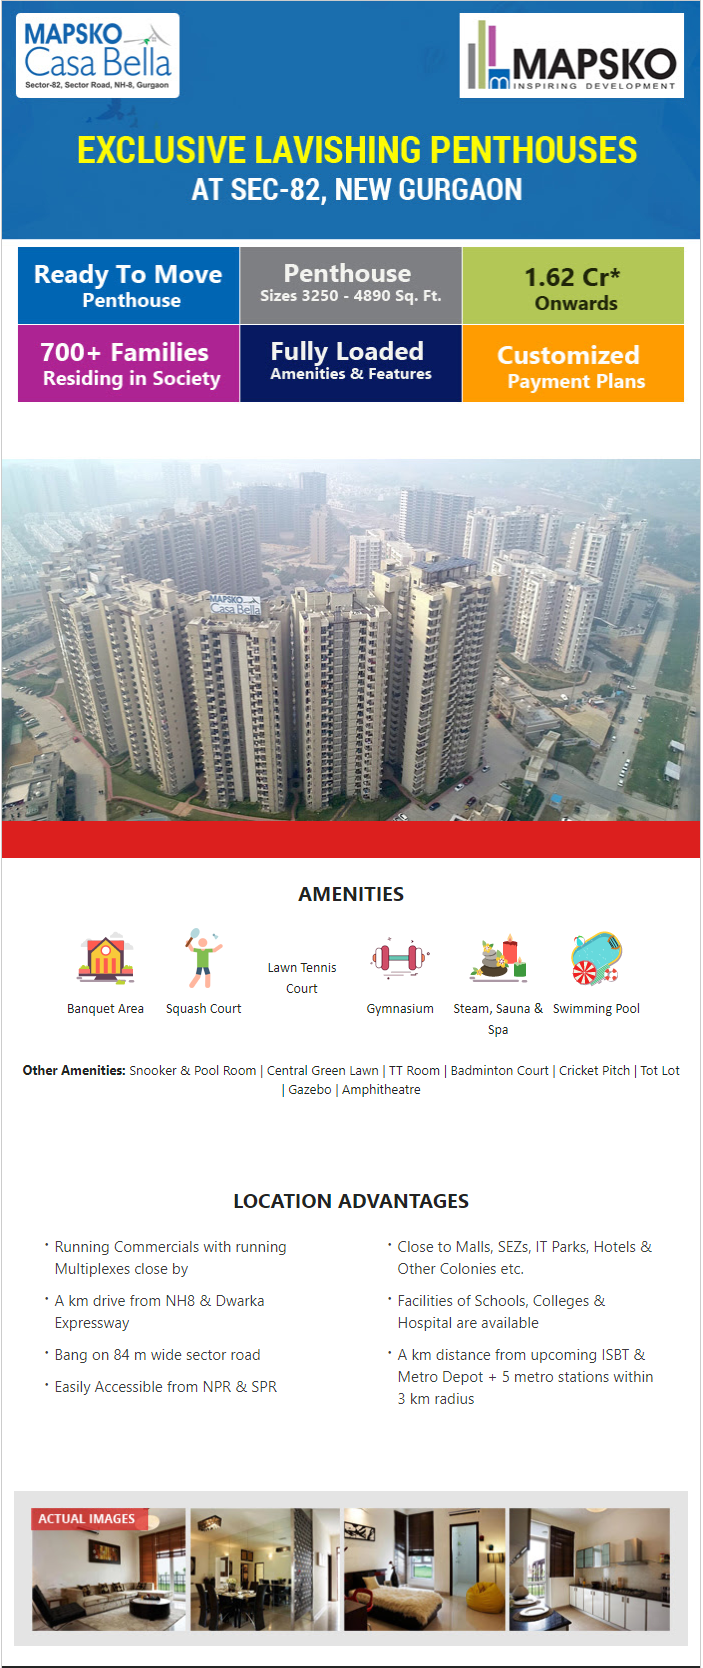 Exclusive lavishing penthouses at Mapsko Casabella in Gurgaon Update